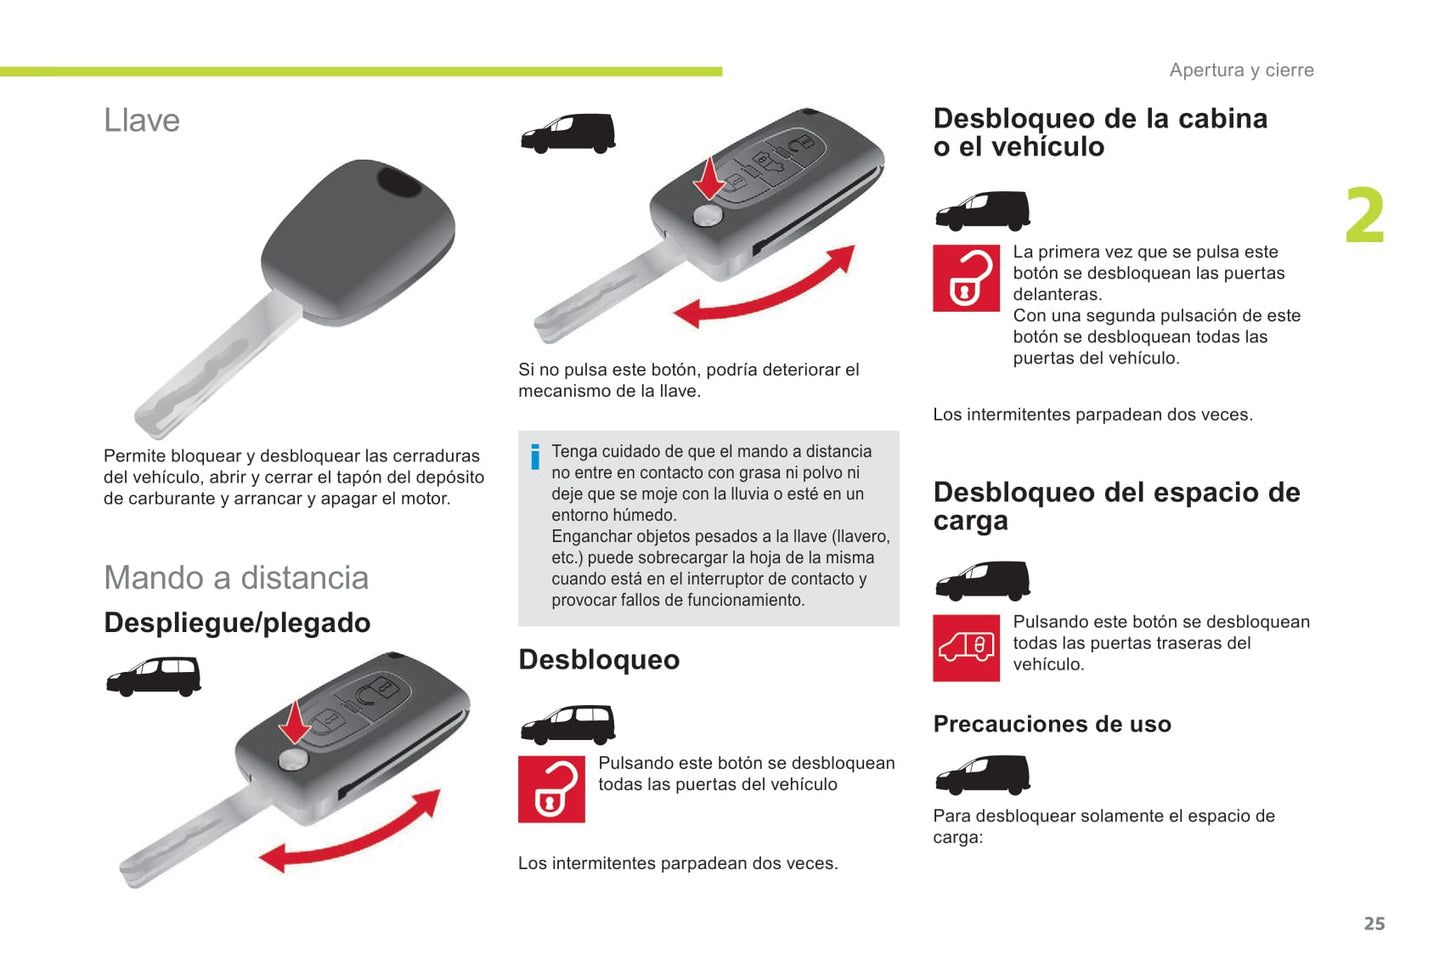 2017-2018 Citroën Berlingo/Berlingo Multispace Gebruikershandleiding | Spaans